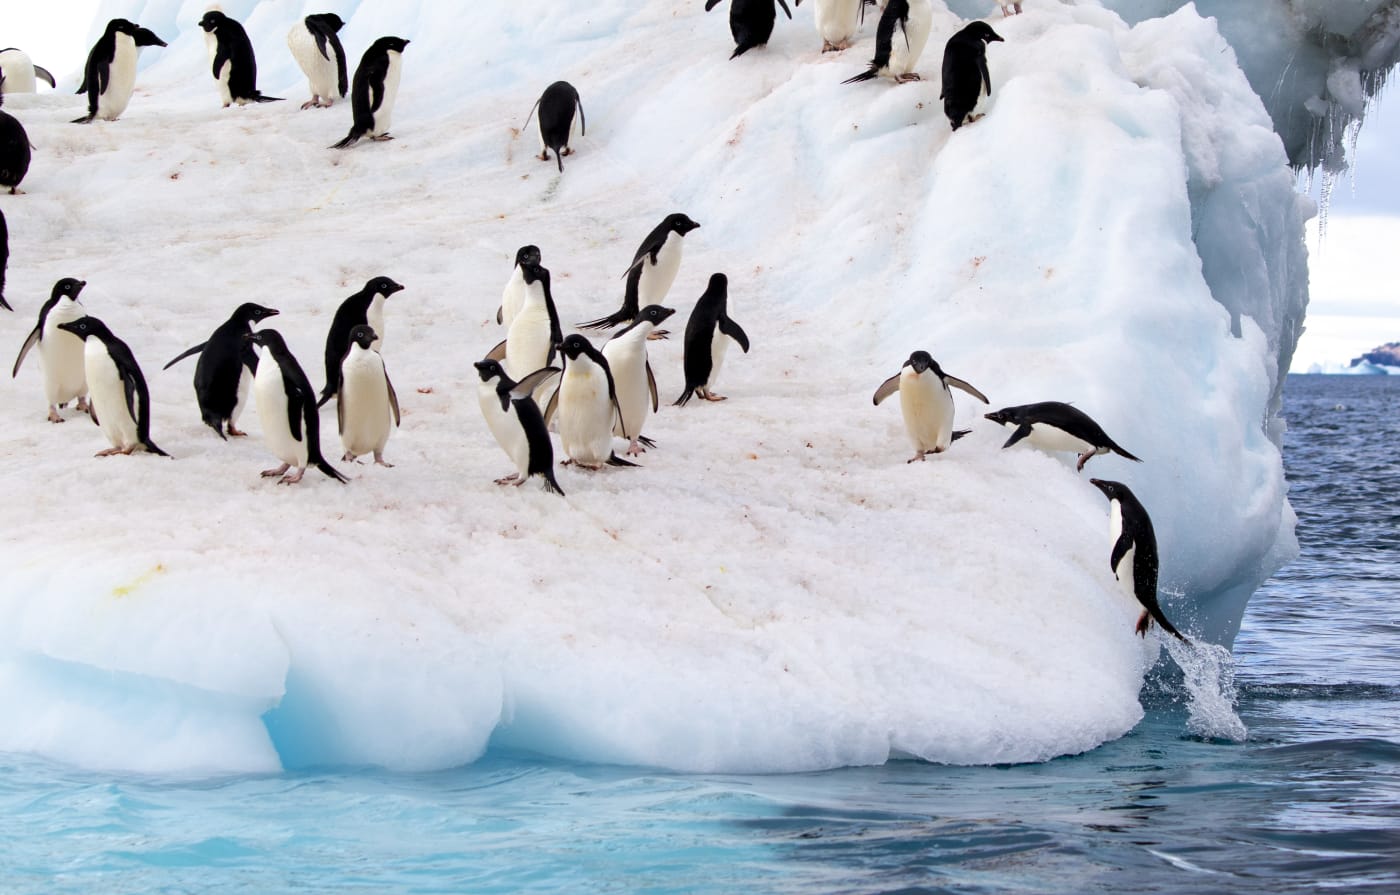 Penguins on glacier in Antarctica